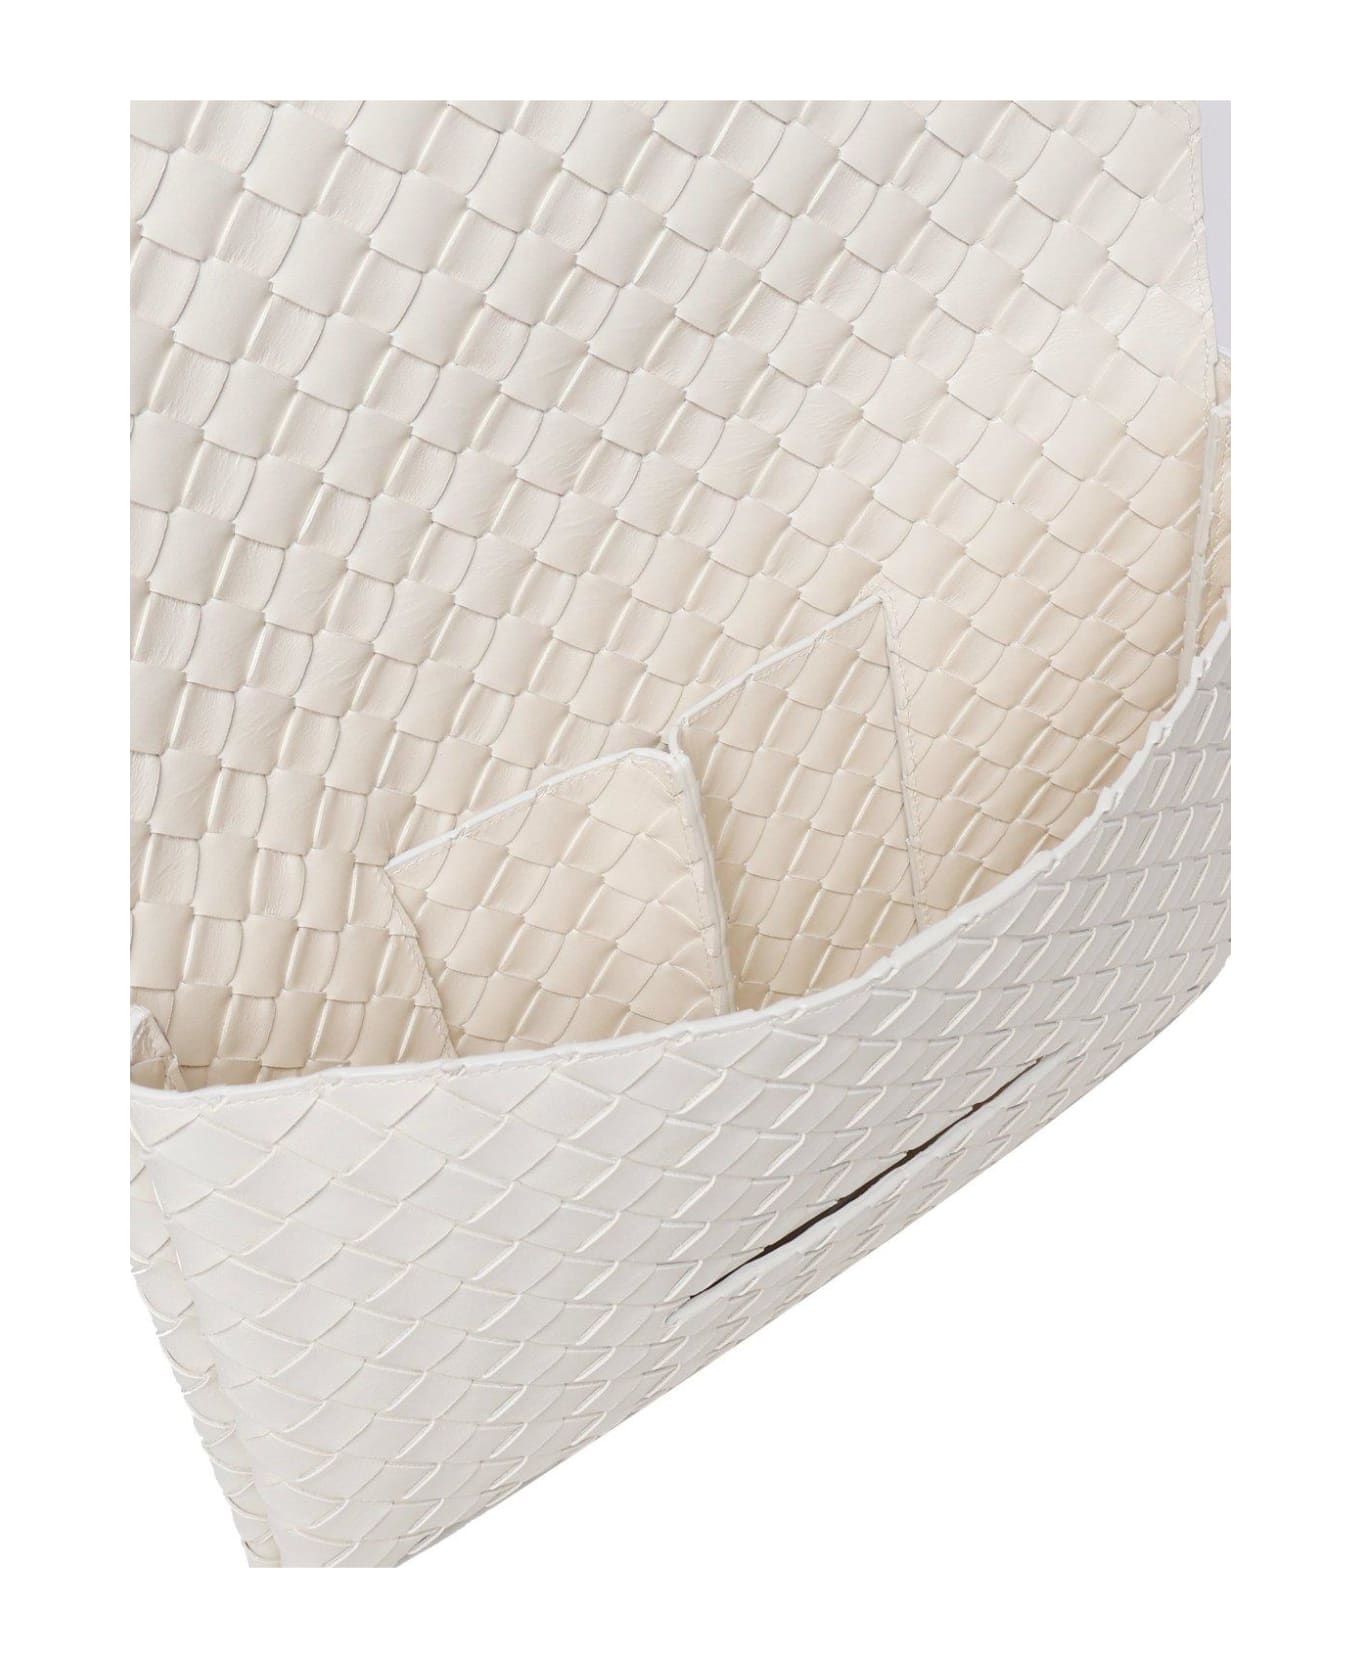 Bottega Veneta Origami Large Clutch Bag - White クラッチバッグ